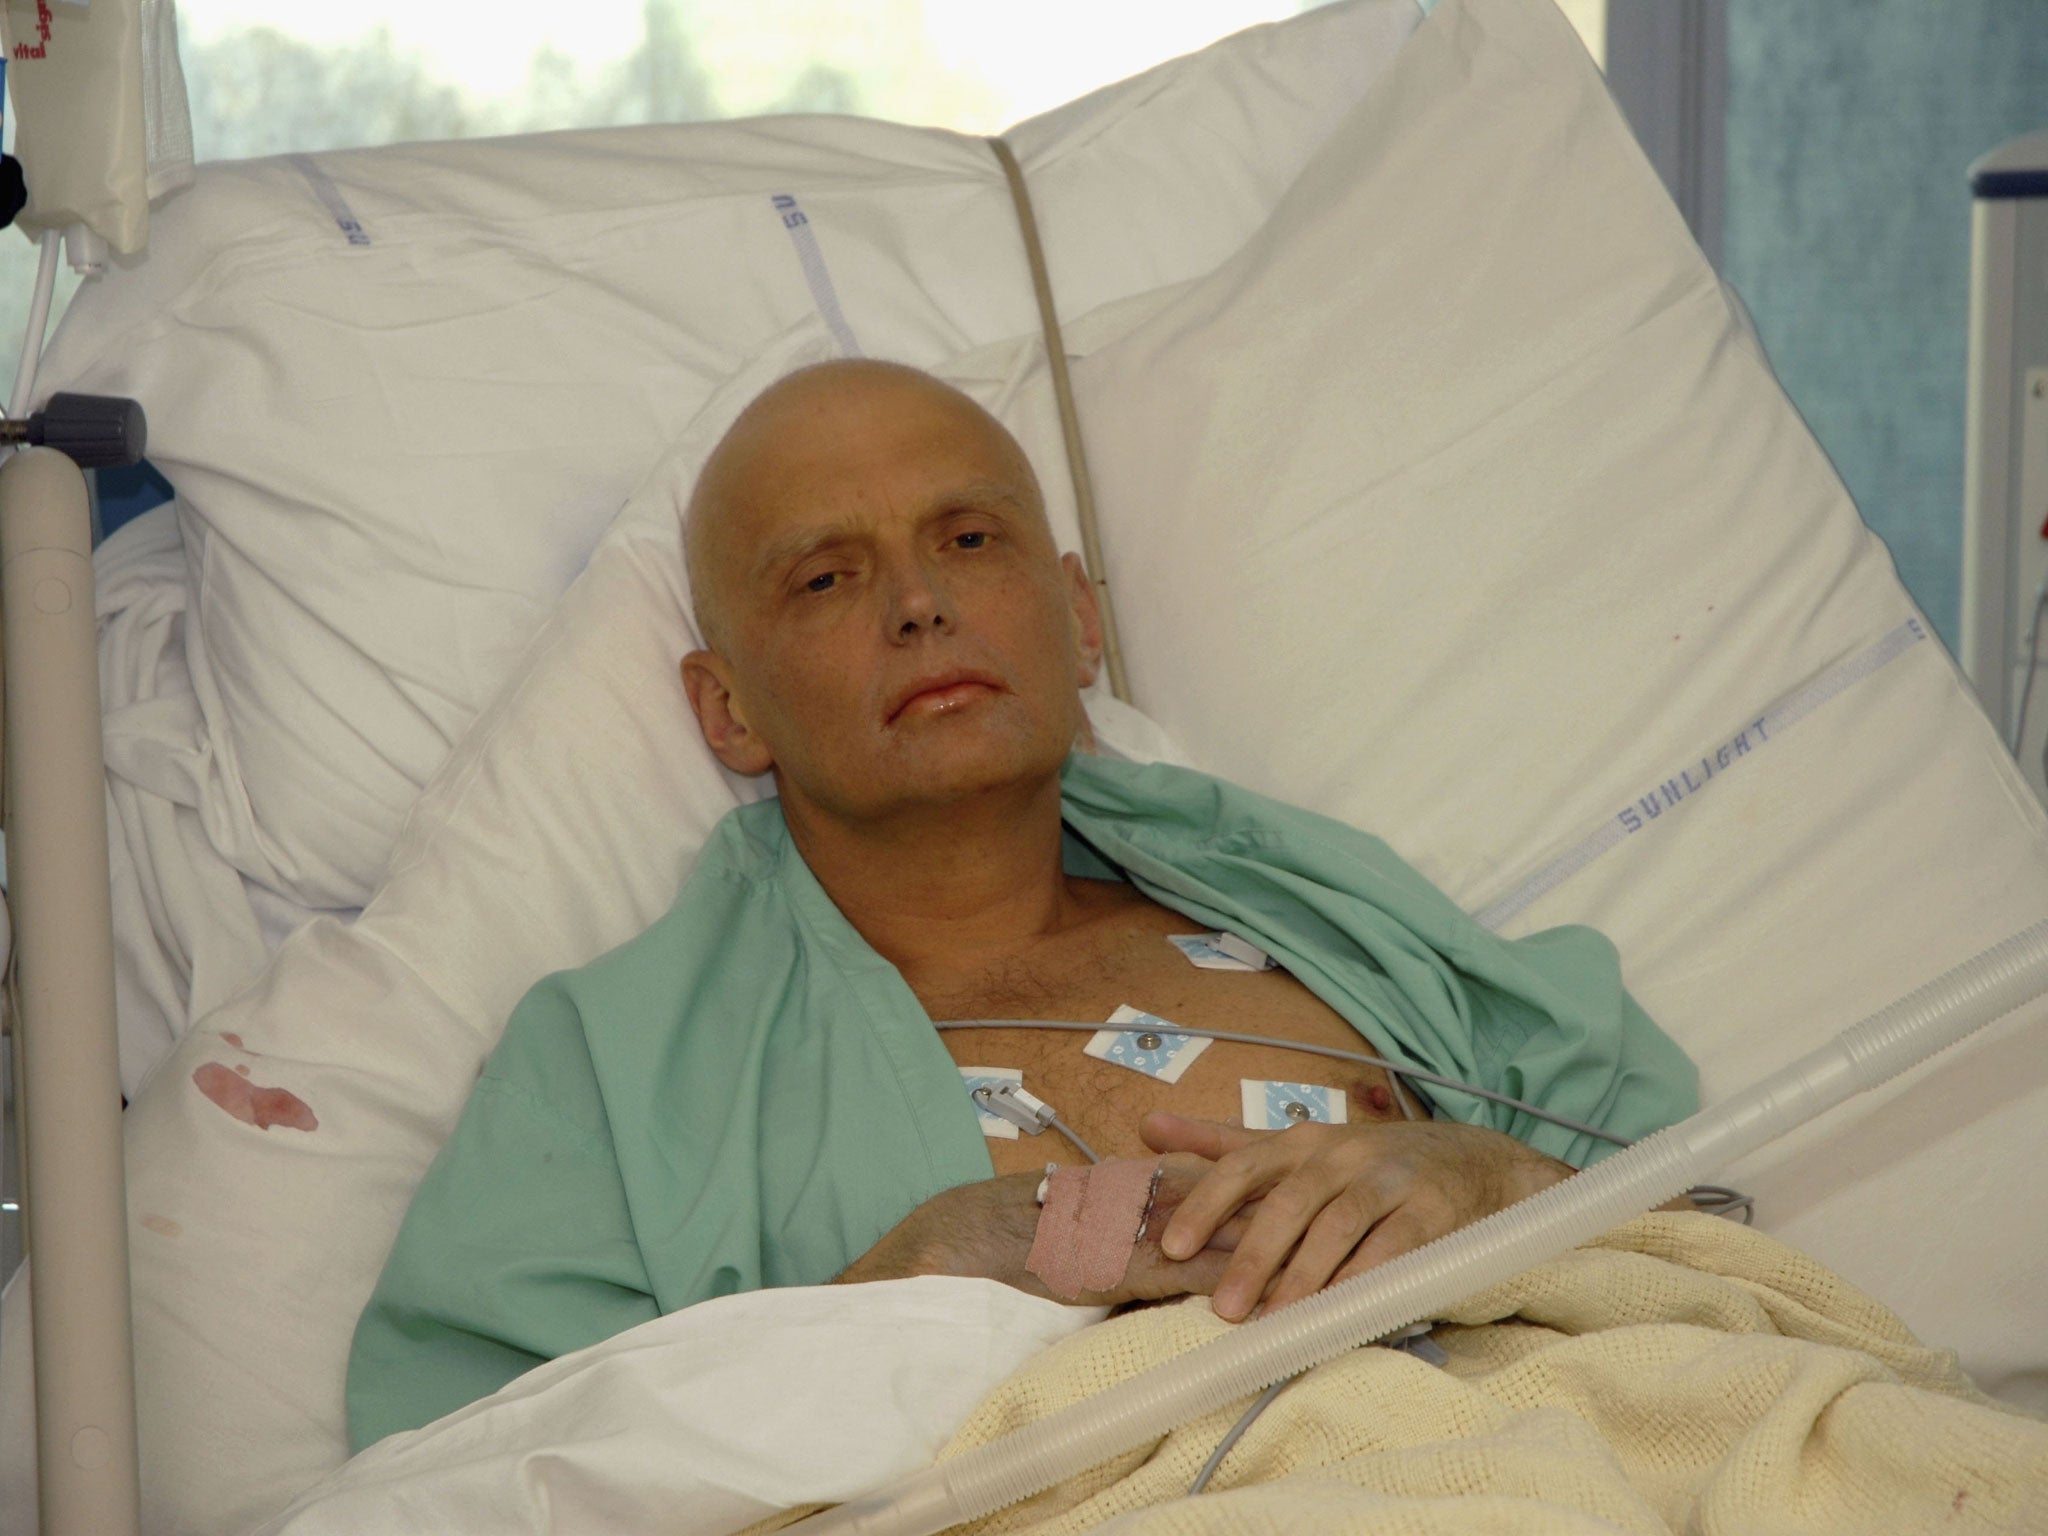 A public inquiry into the fatal poisoning of Alexander Litvinenko will start next week